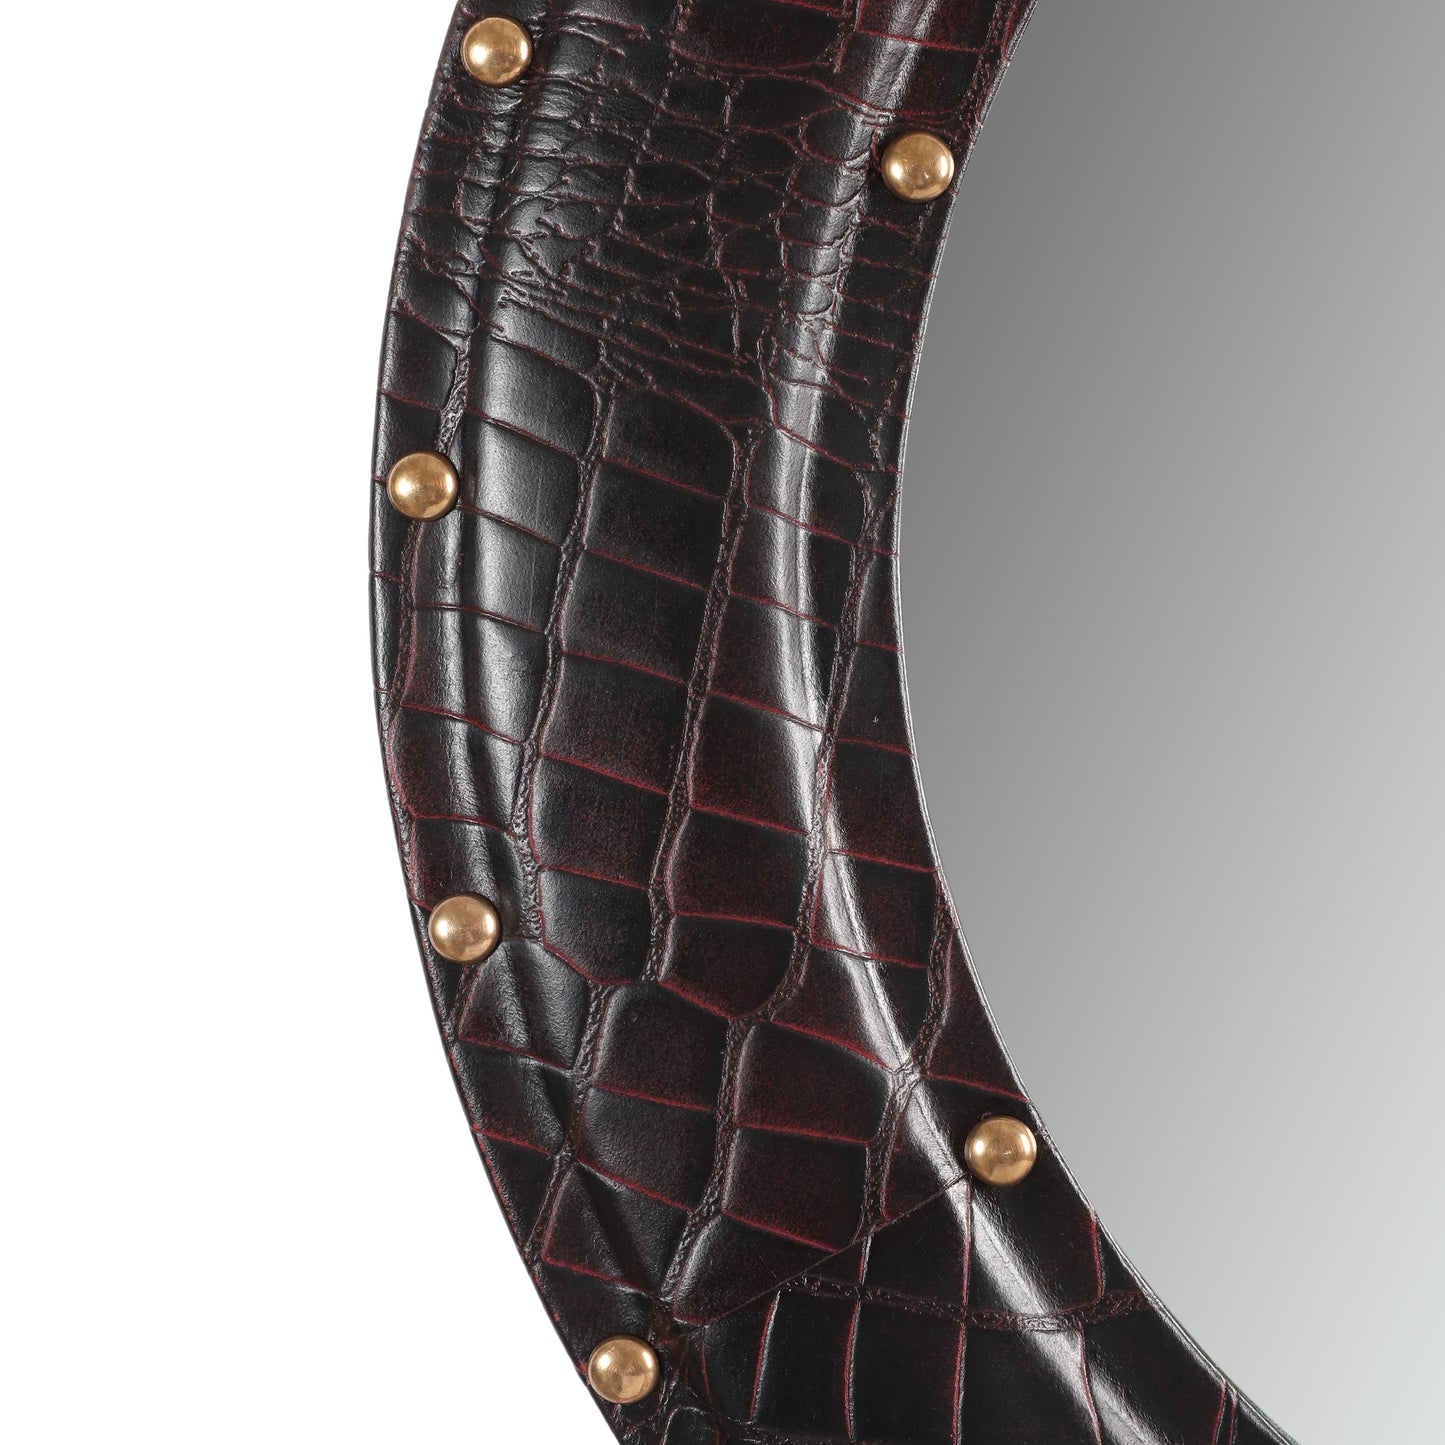 Fieldwood Handcrafted Boho Studded Croco Leather Round Wall Mirror